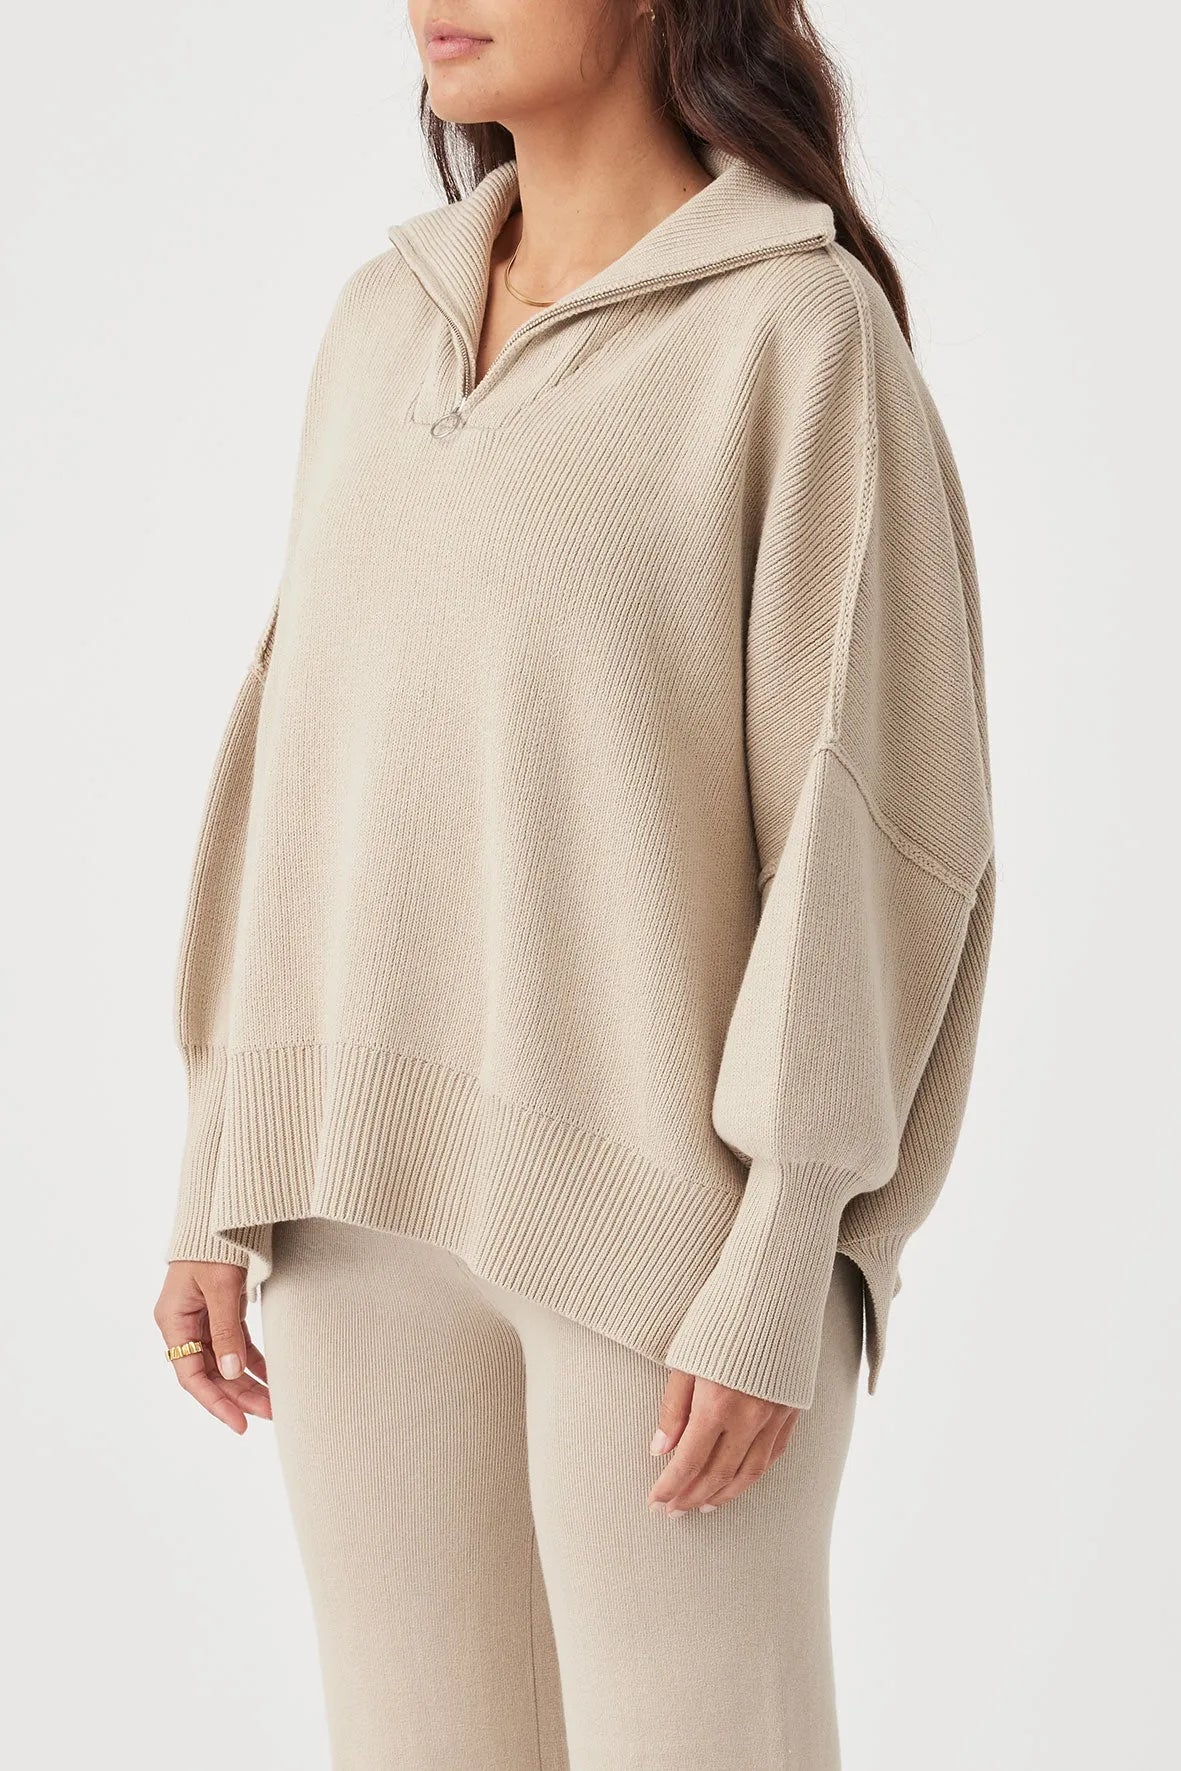 Arcaa Movement | London Zip Sweater - Taupe